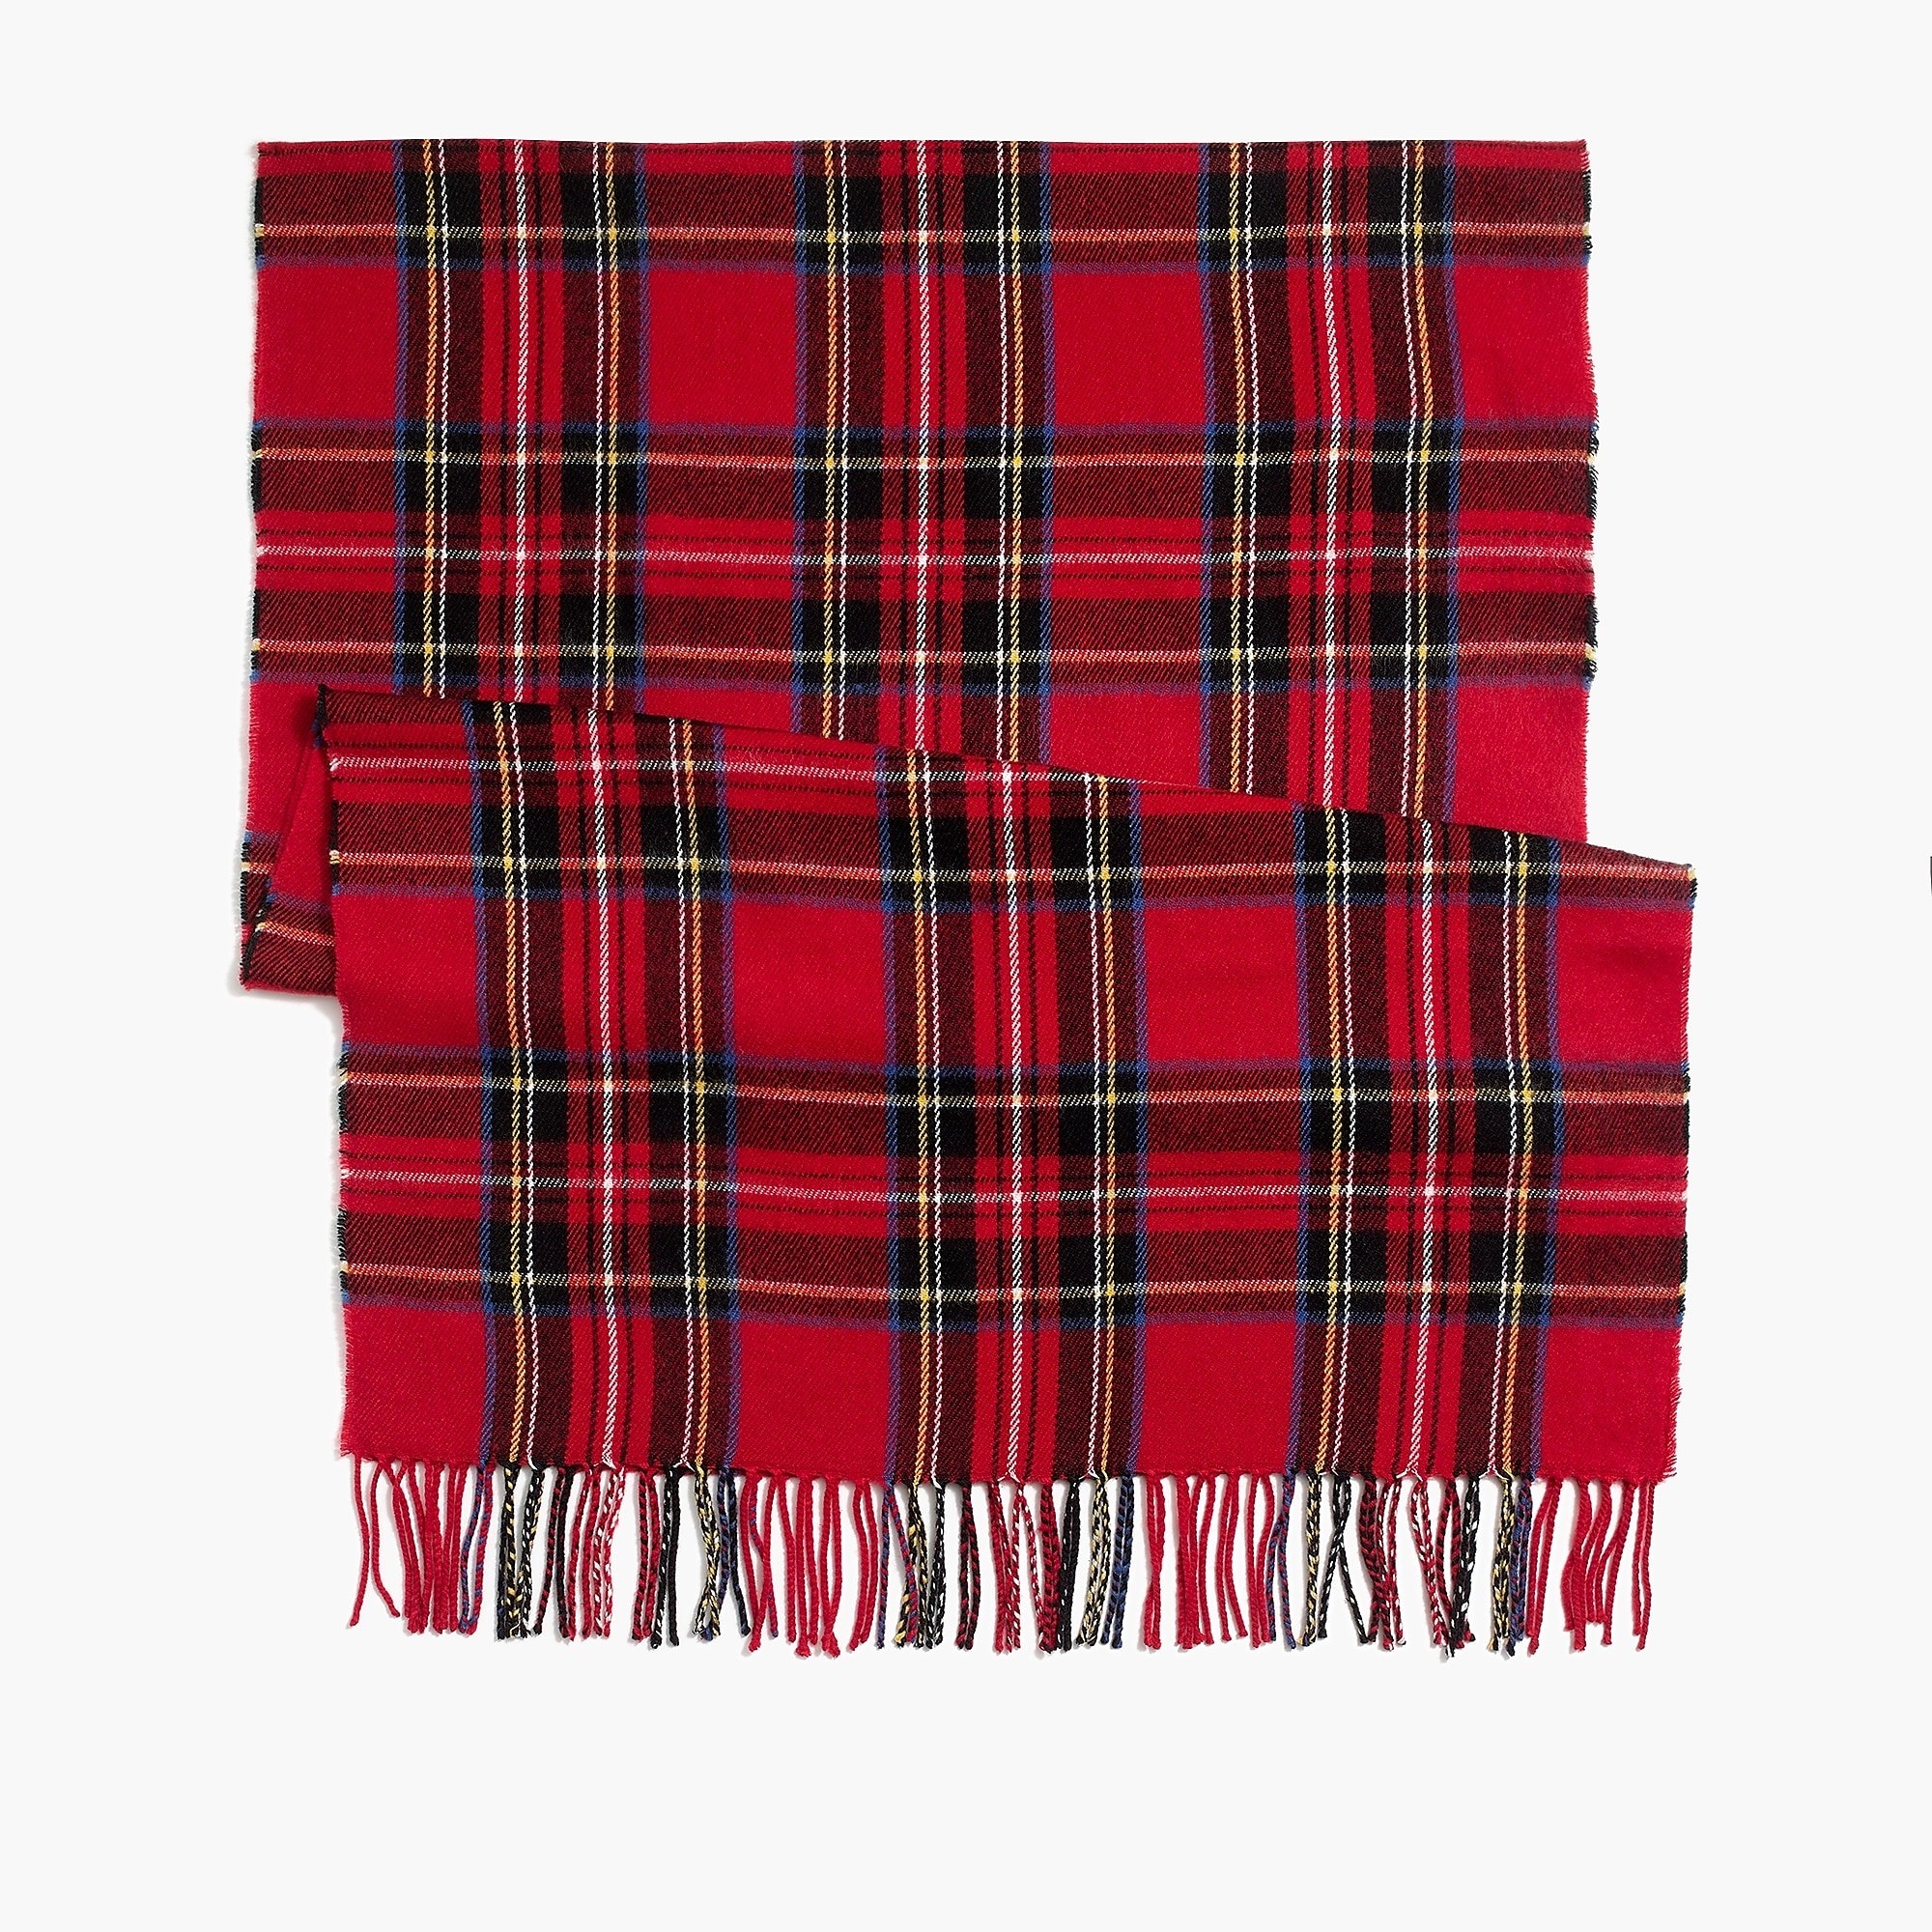 A red plaid scarf